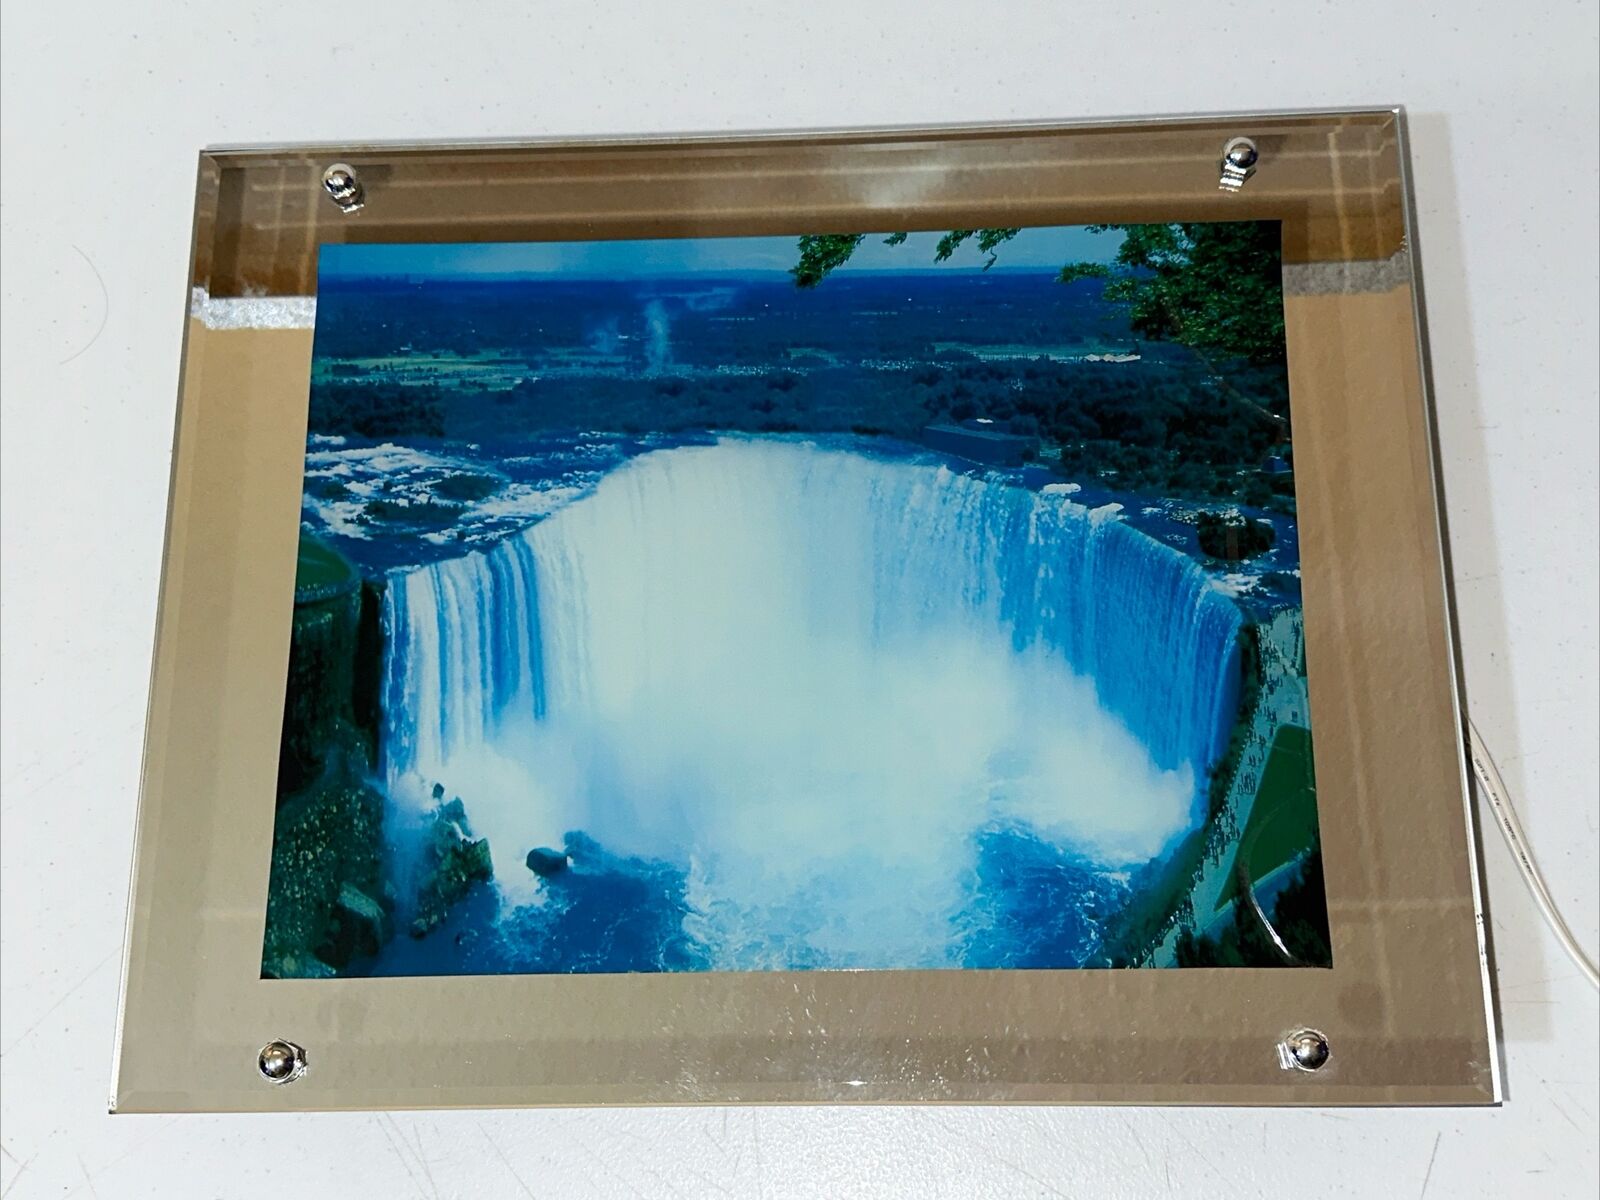 VTG Motion Image Lamp Moving Niagara Falls Waterfall Picture Light Sound Mirror